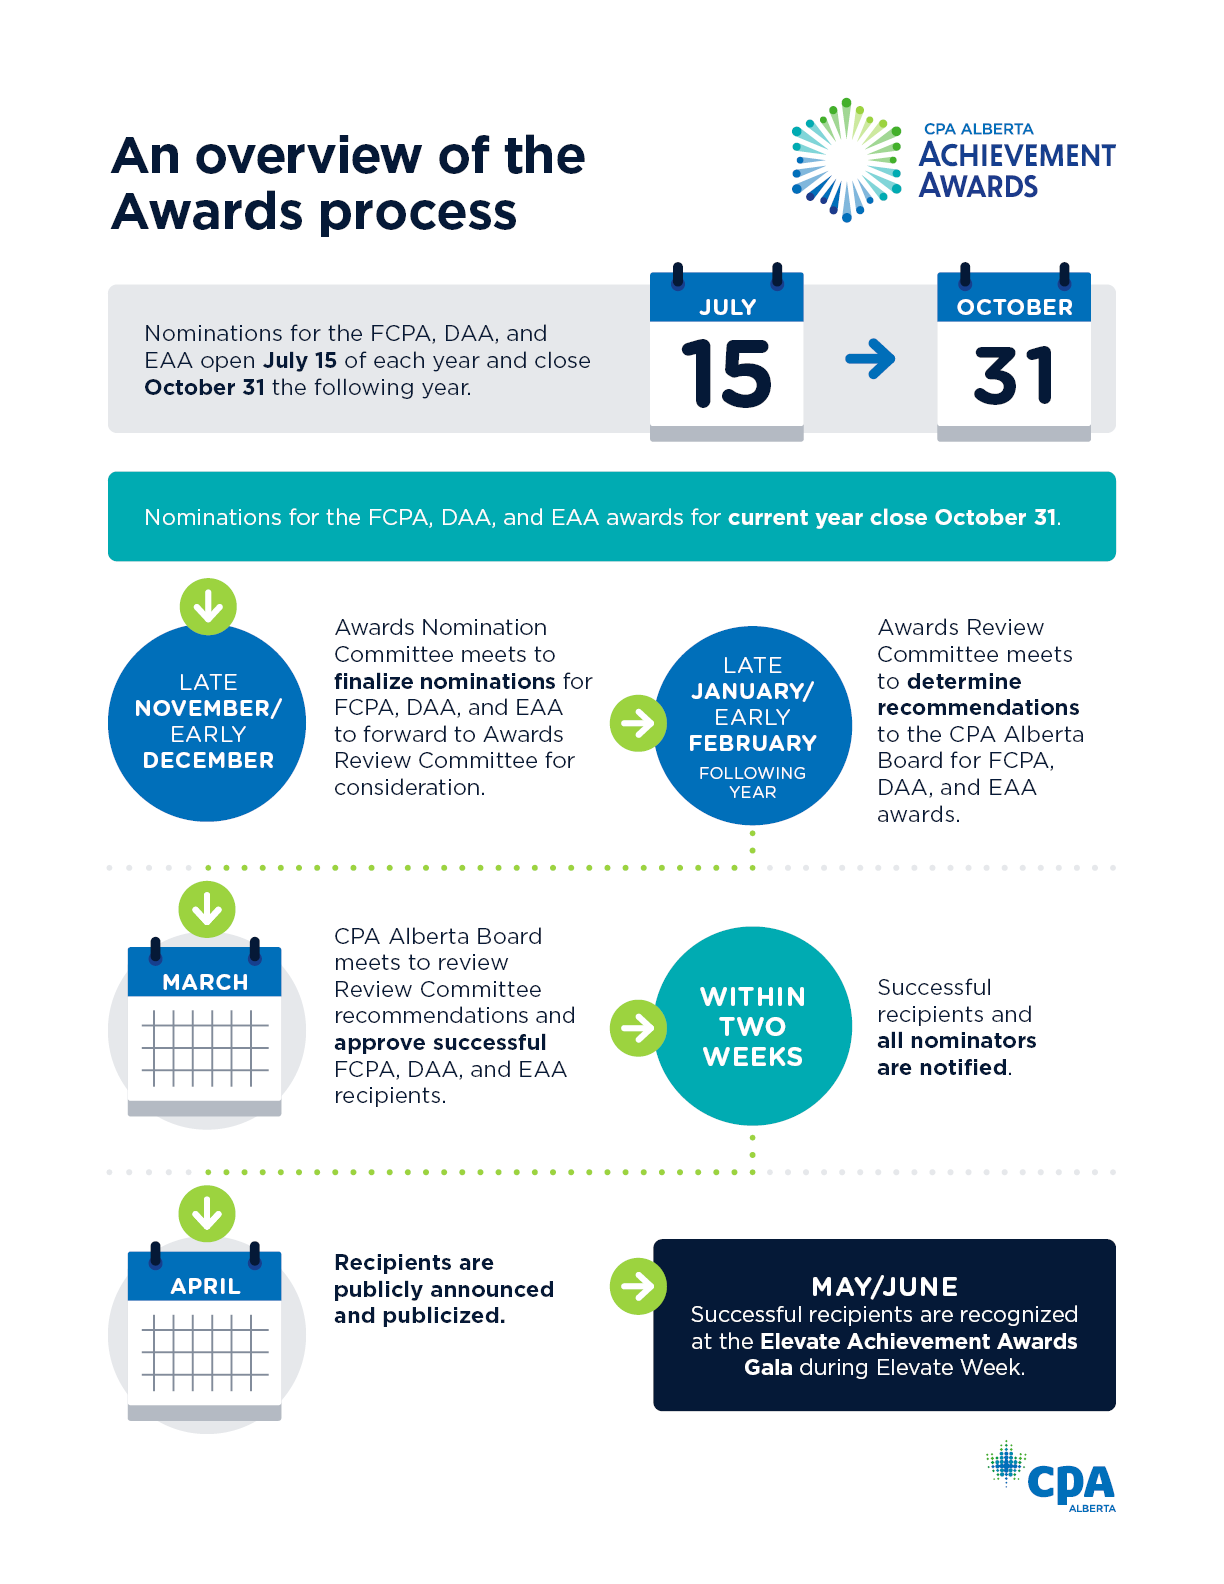 CPA Alberta Achievement Award infographic